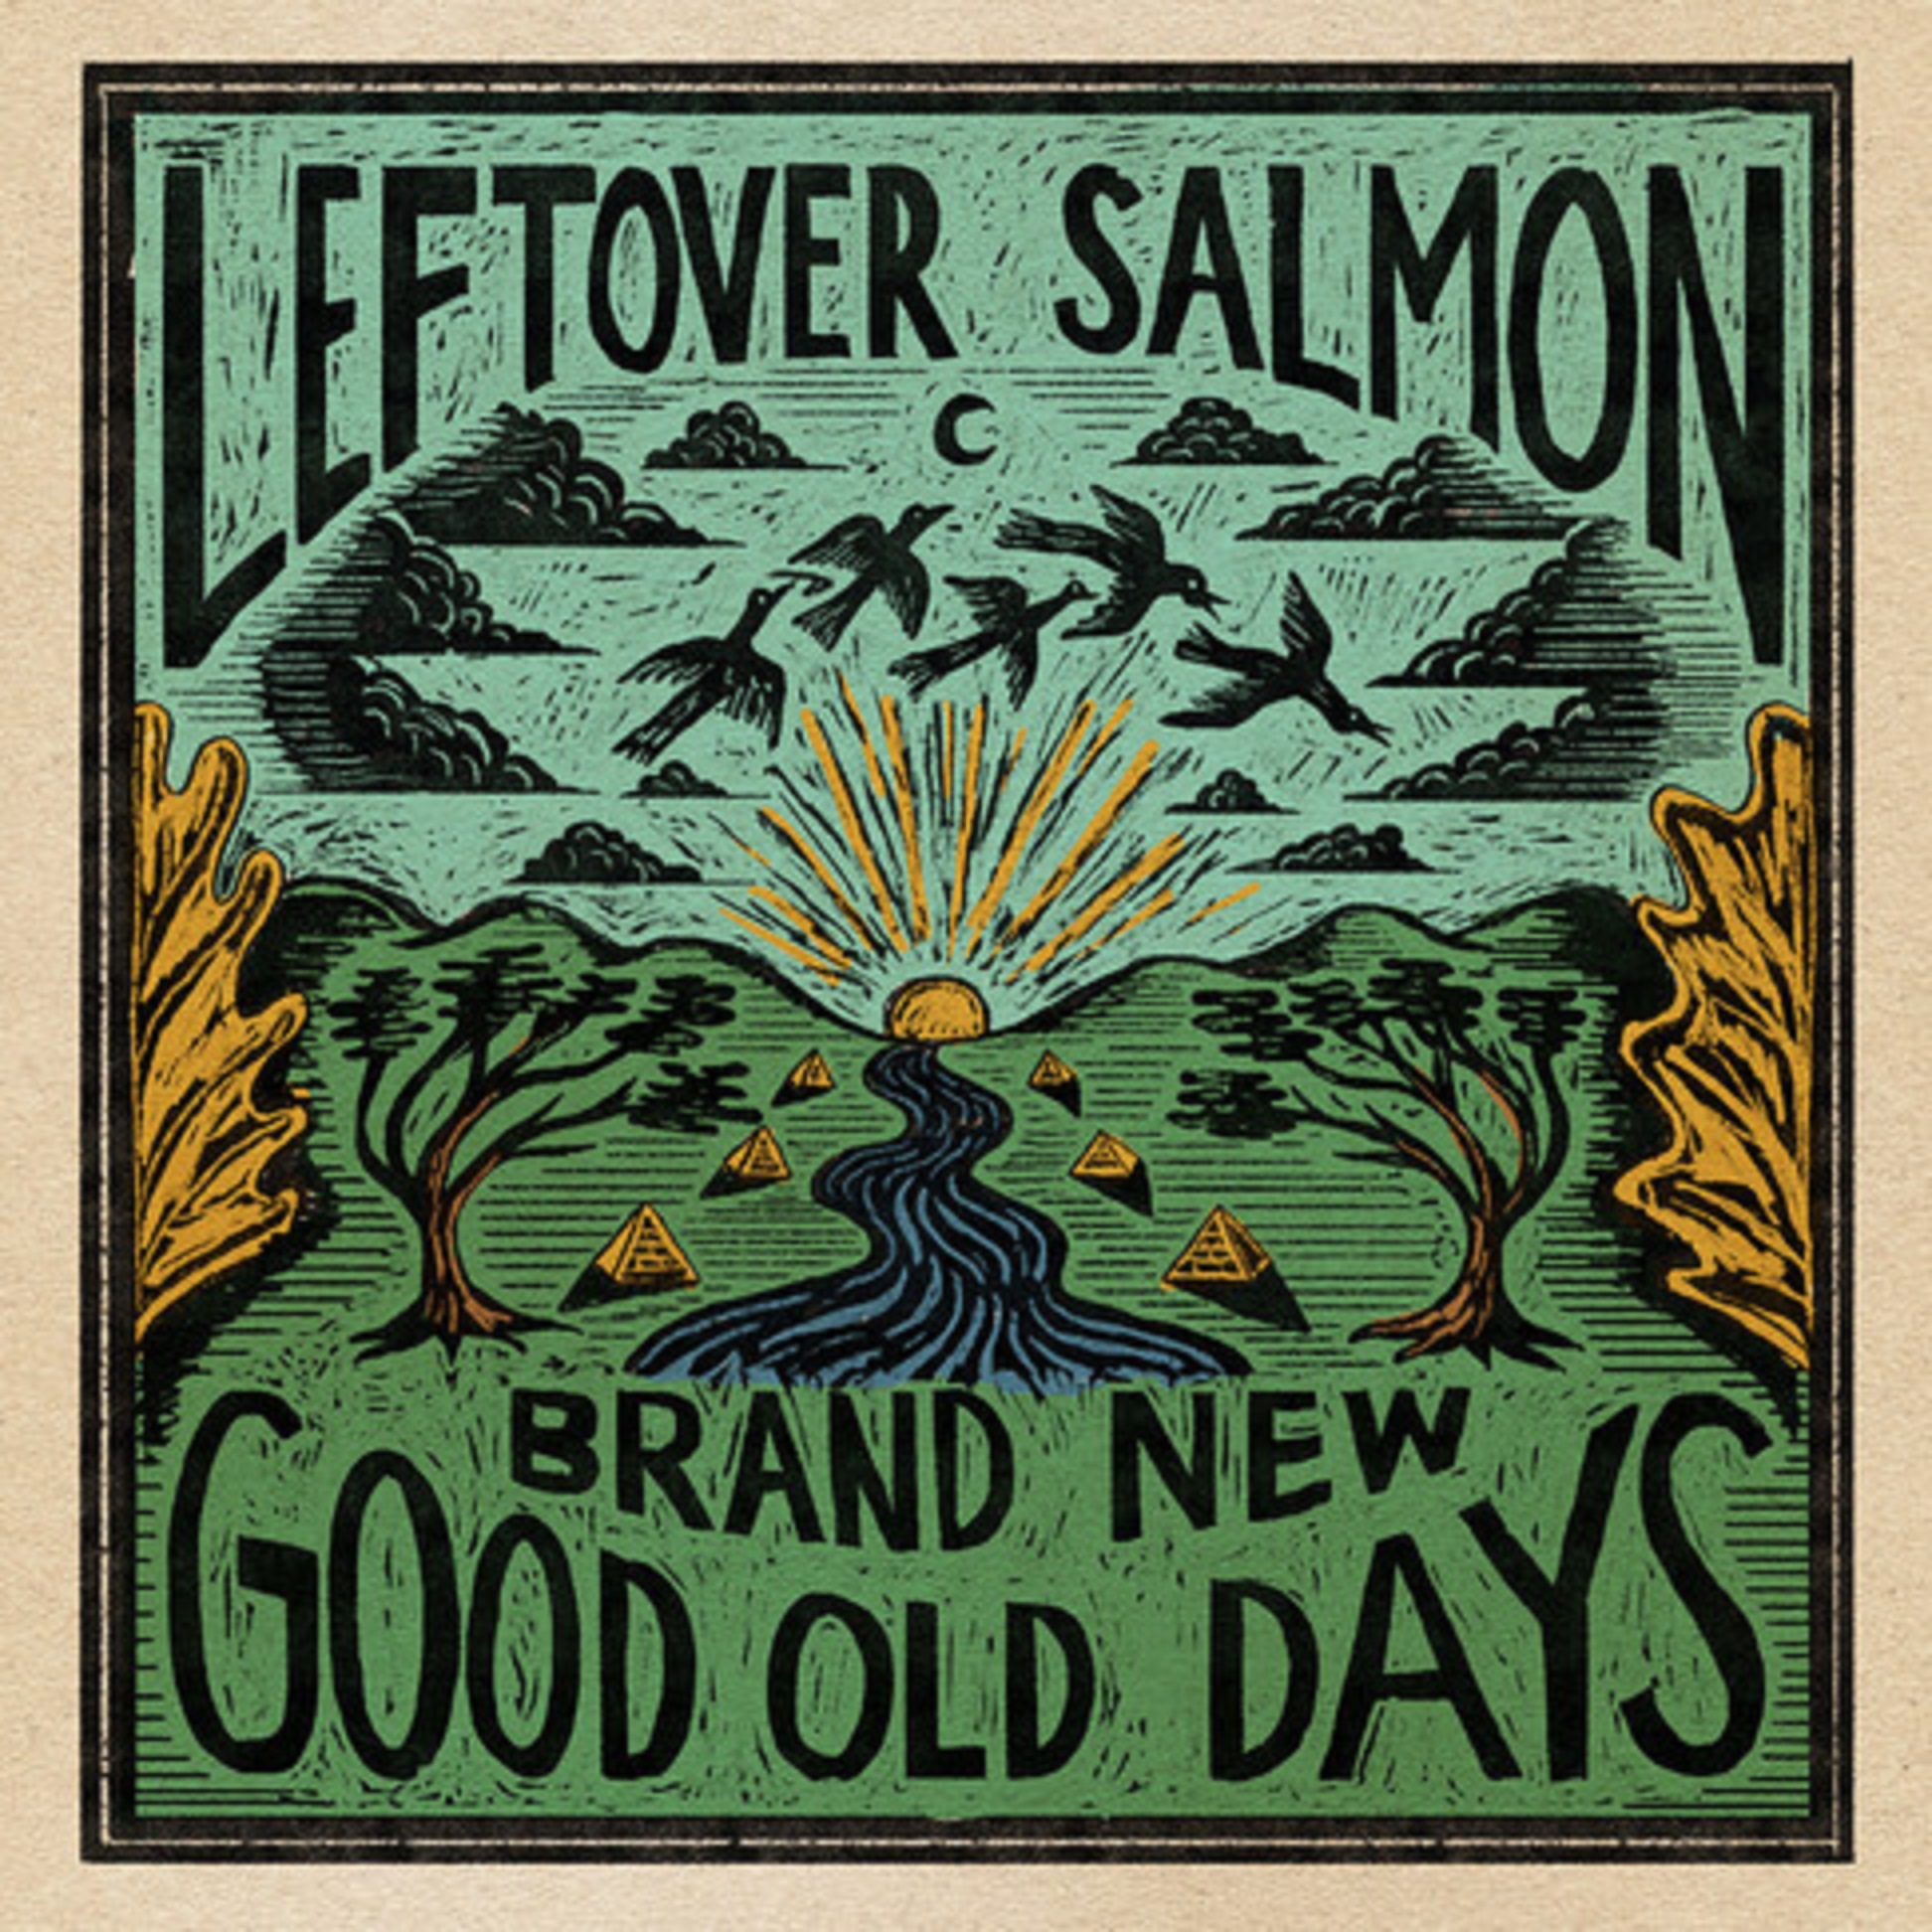 LEFTOVER SALMON celebrates the "Brand New Good Old Days"